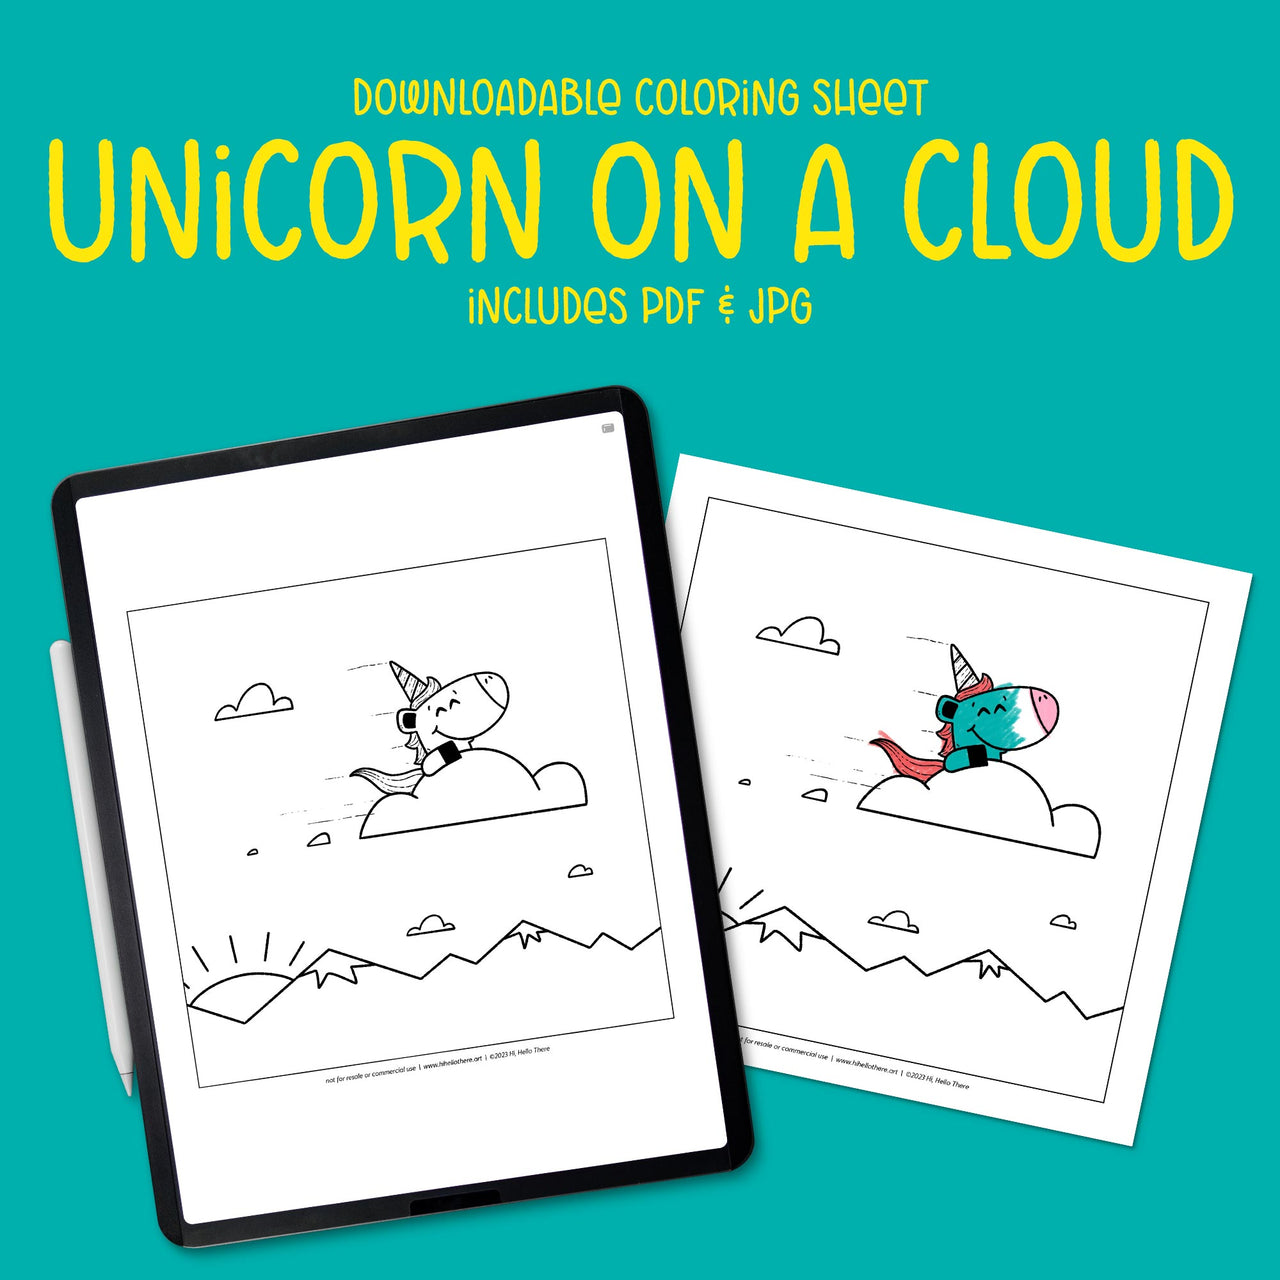 Unicorn on a Cloud Downloadable Coloring Sheet